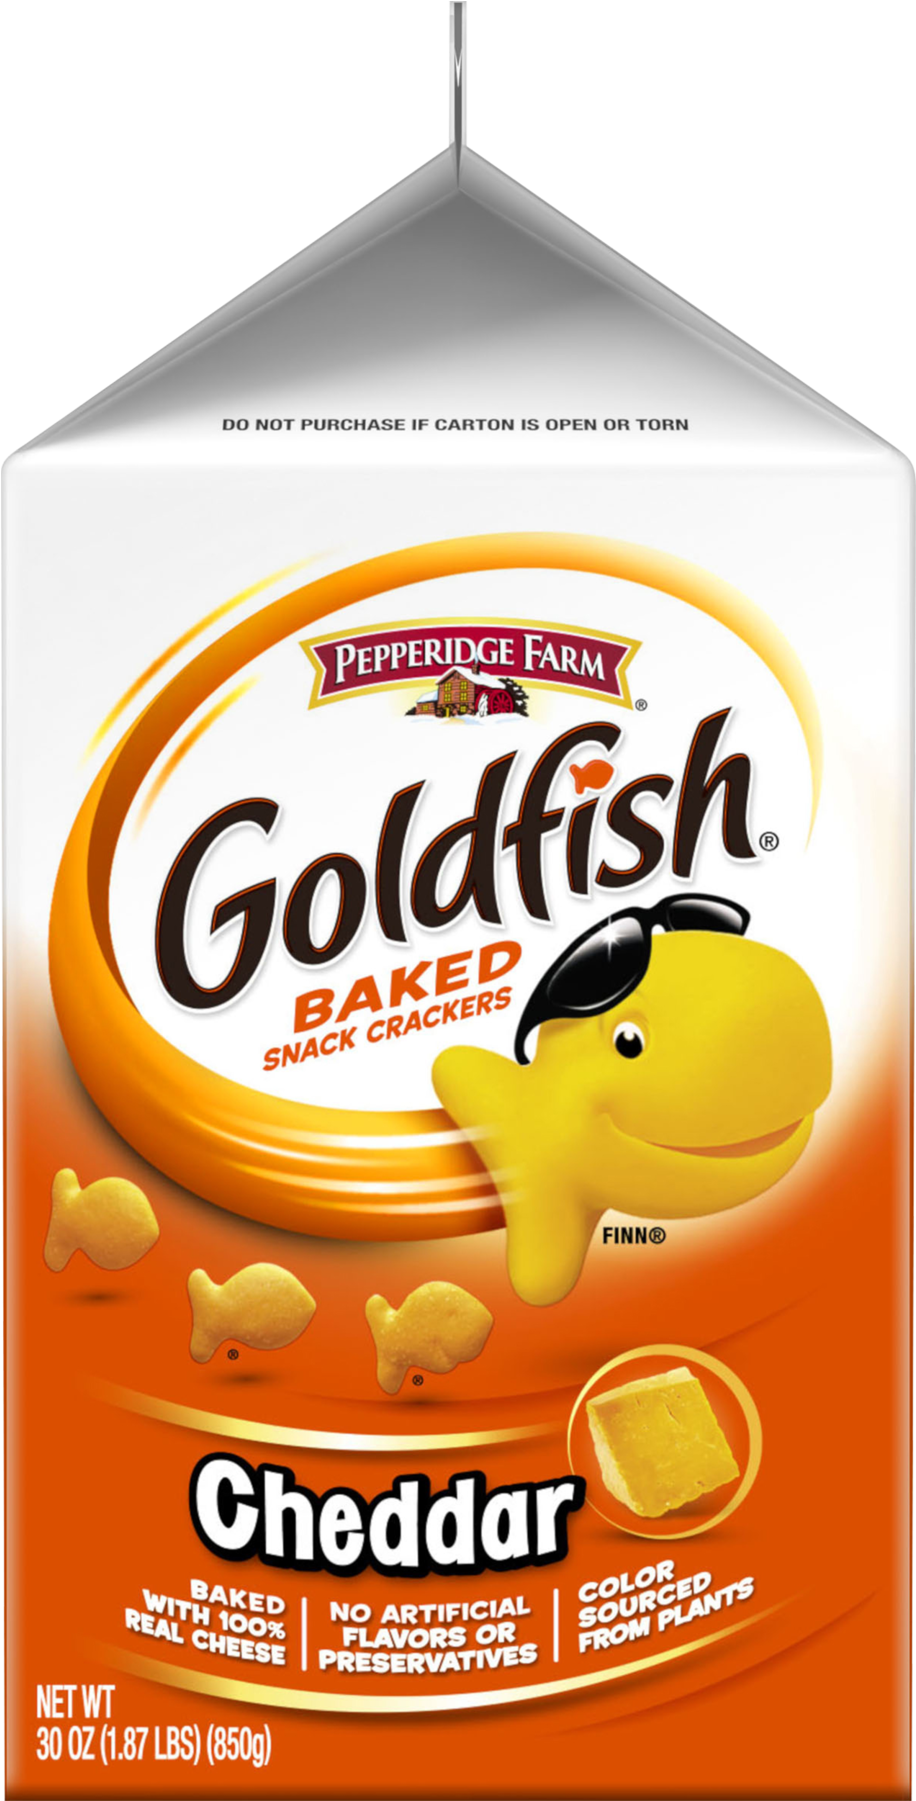 Pepperidge Farm Goldfish Baked Snack Crackers Cheddar - Goldfish Crackers (1800x1800)